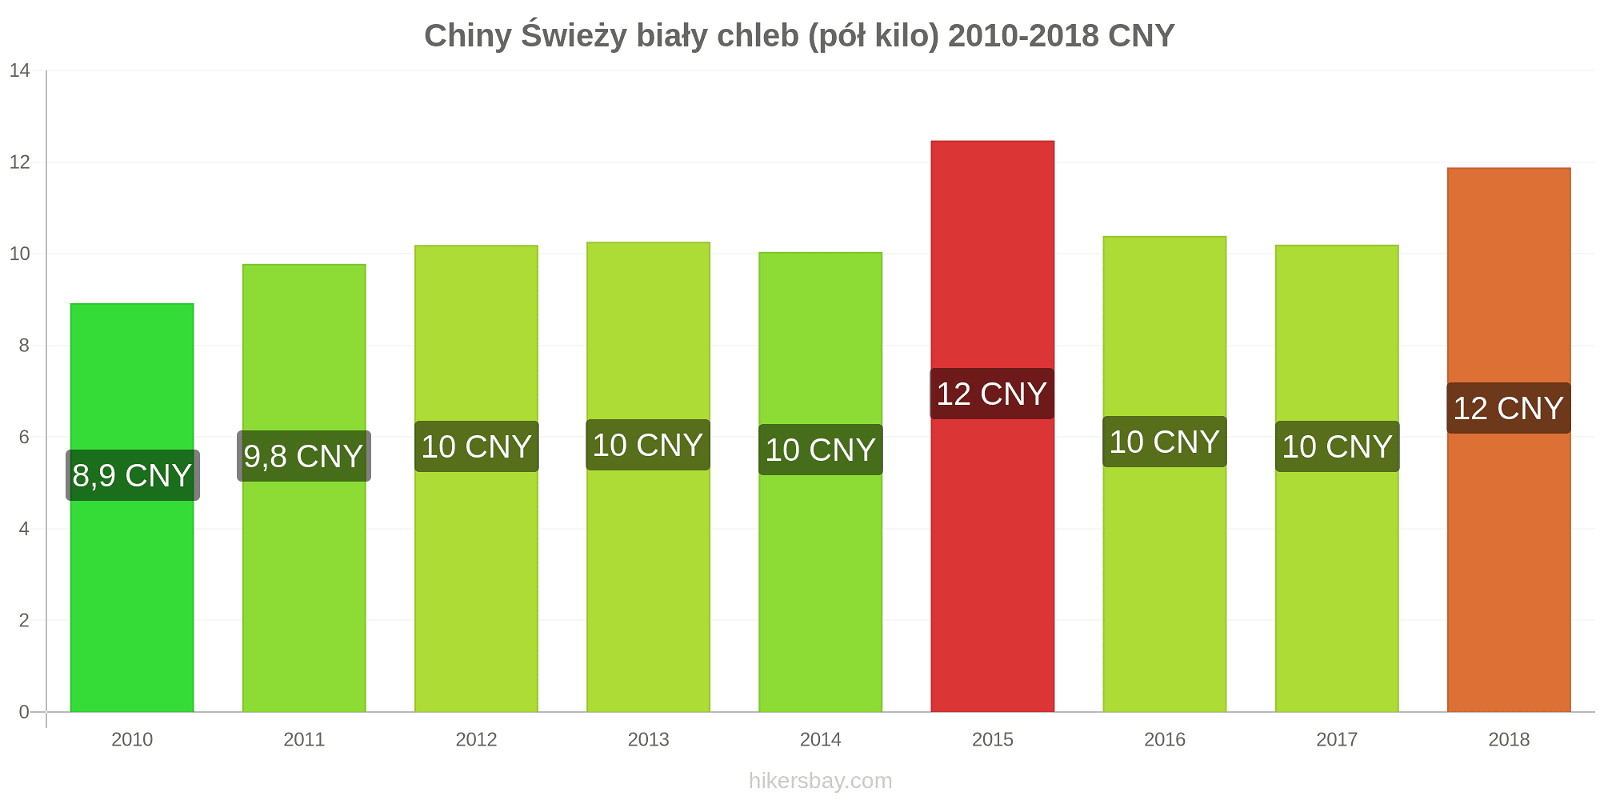 Chiny zmiany cen Chleb pół kilo hikersbay.com